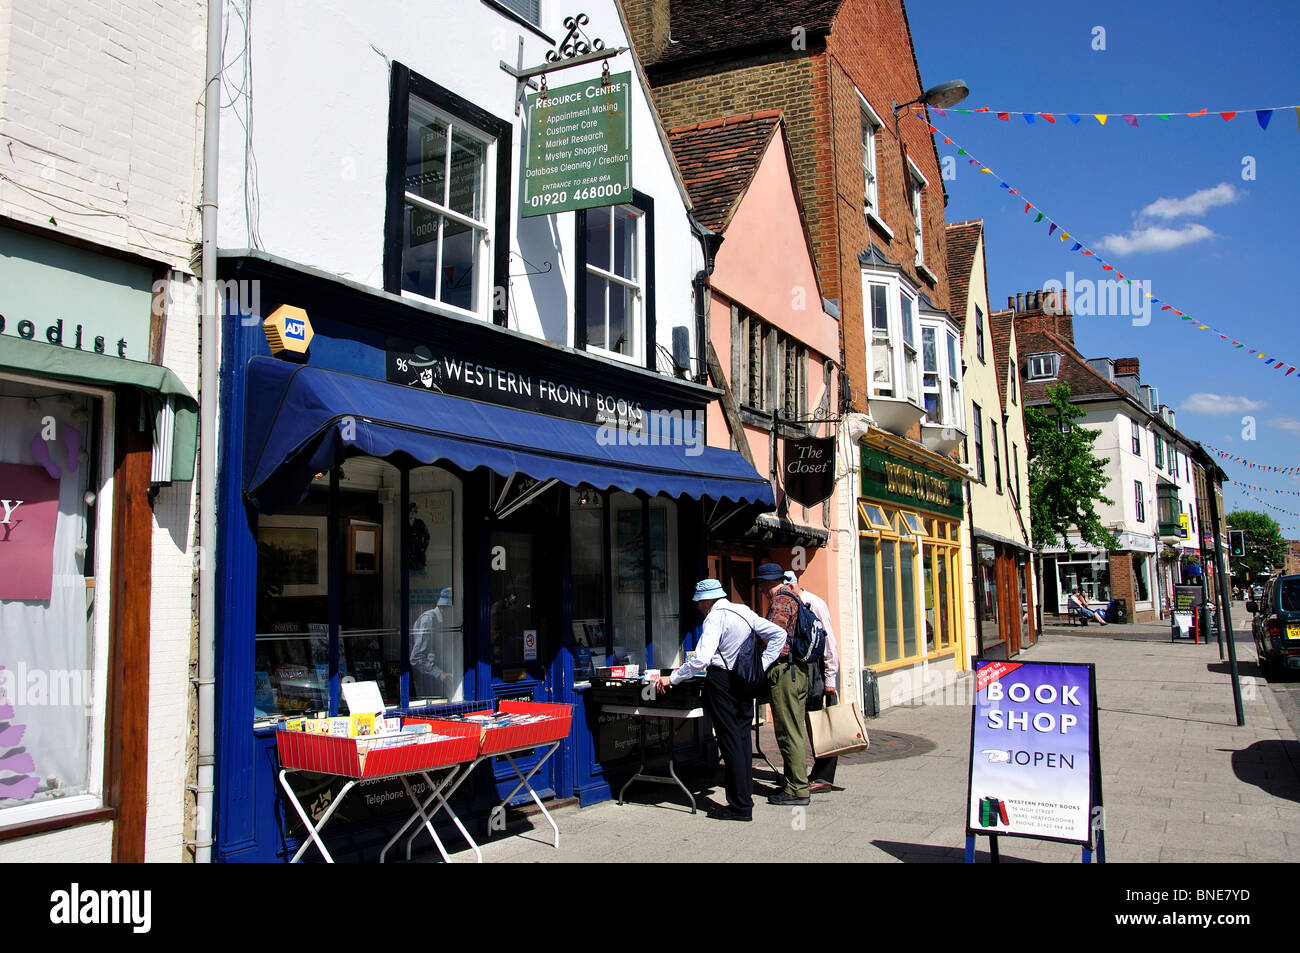 Book shop on High Street, Ware, Hertfordshire, England, United Kingdom Stock Photo